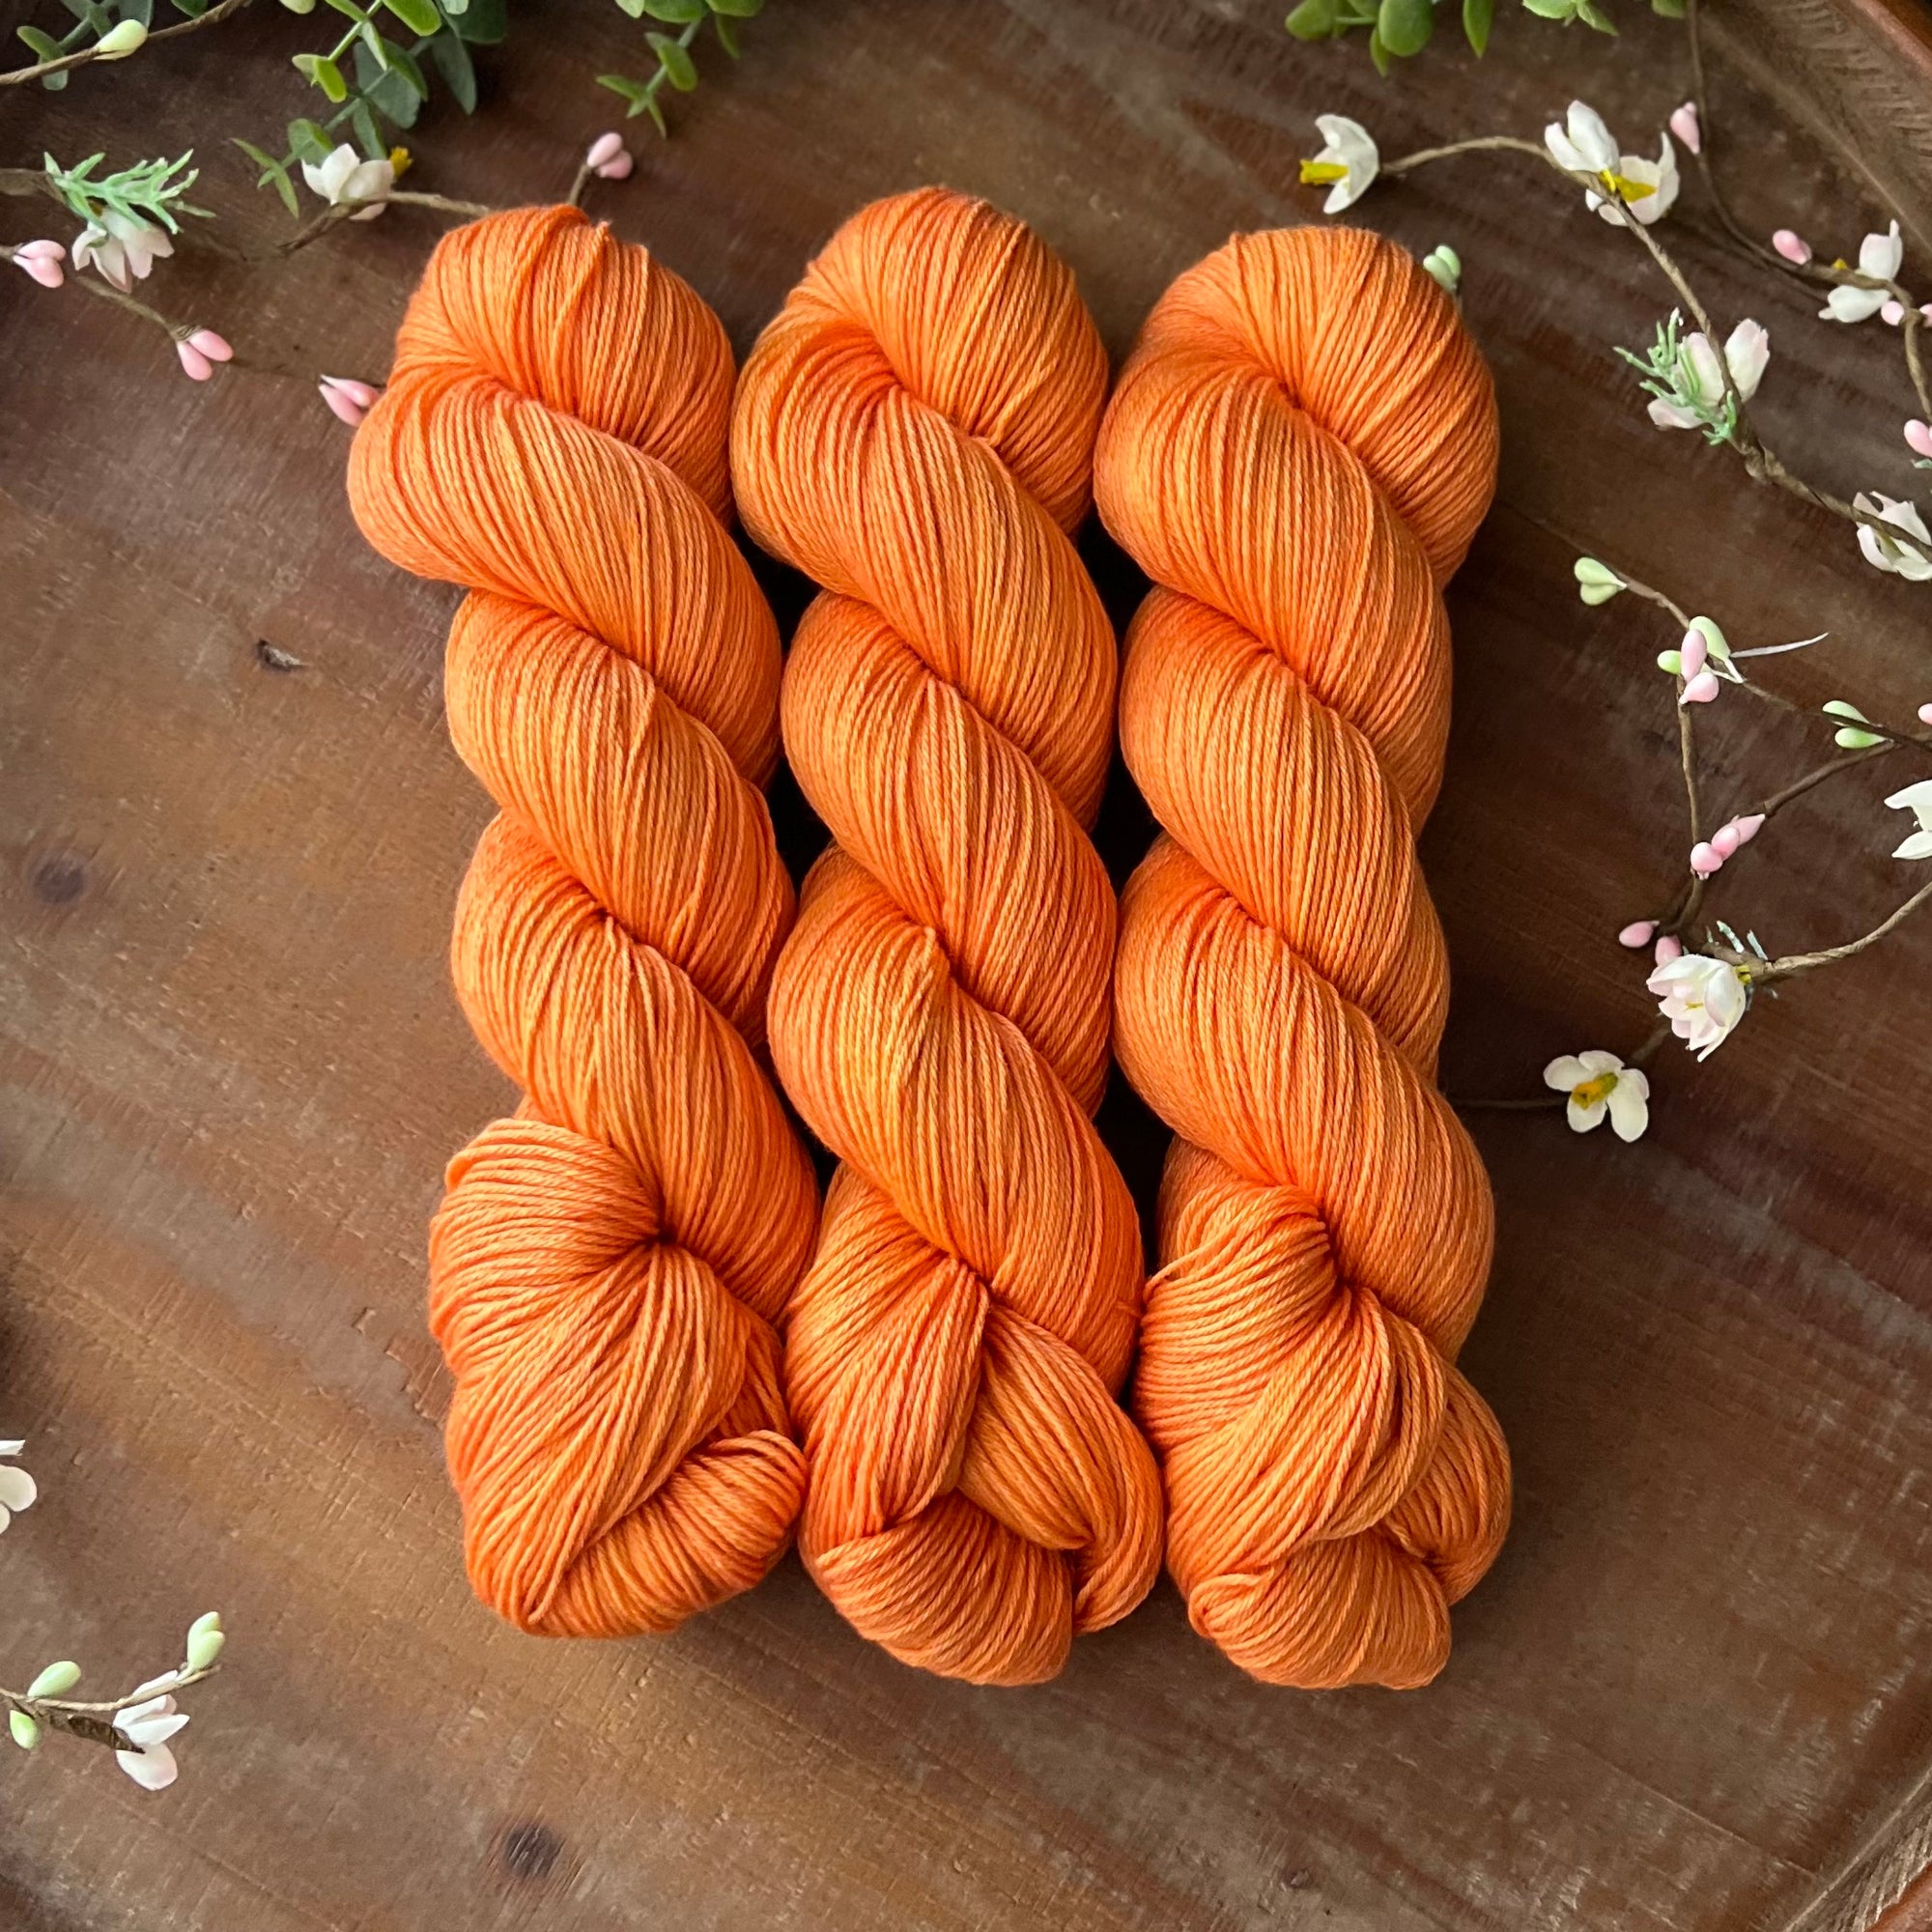 "Monarch" Merino Cotton 50/50 Hand-dyed Yarn